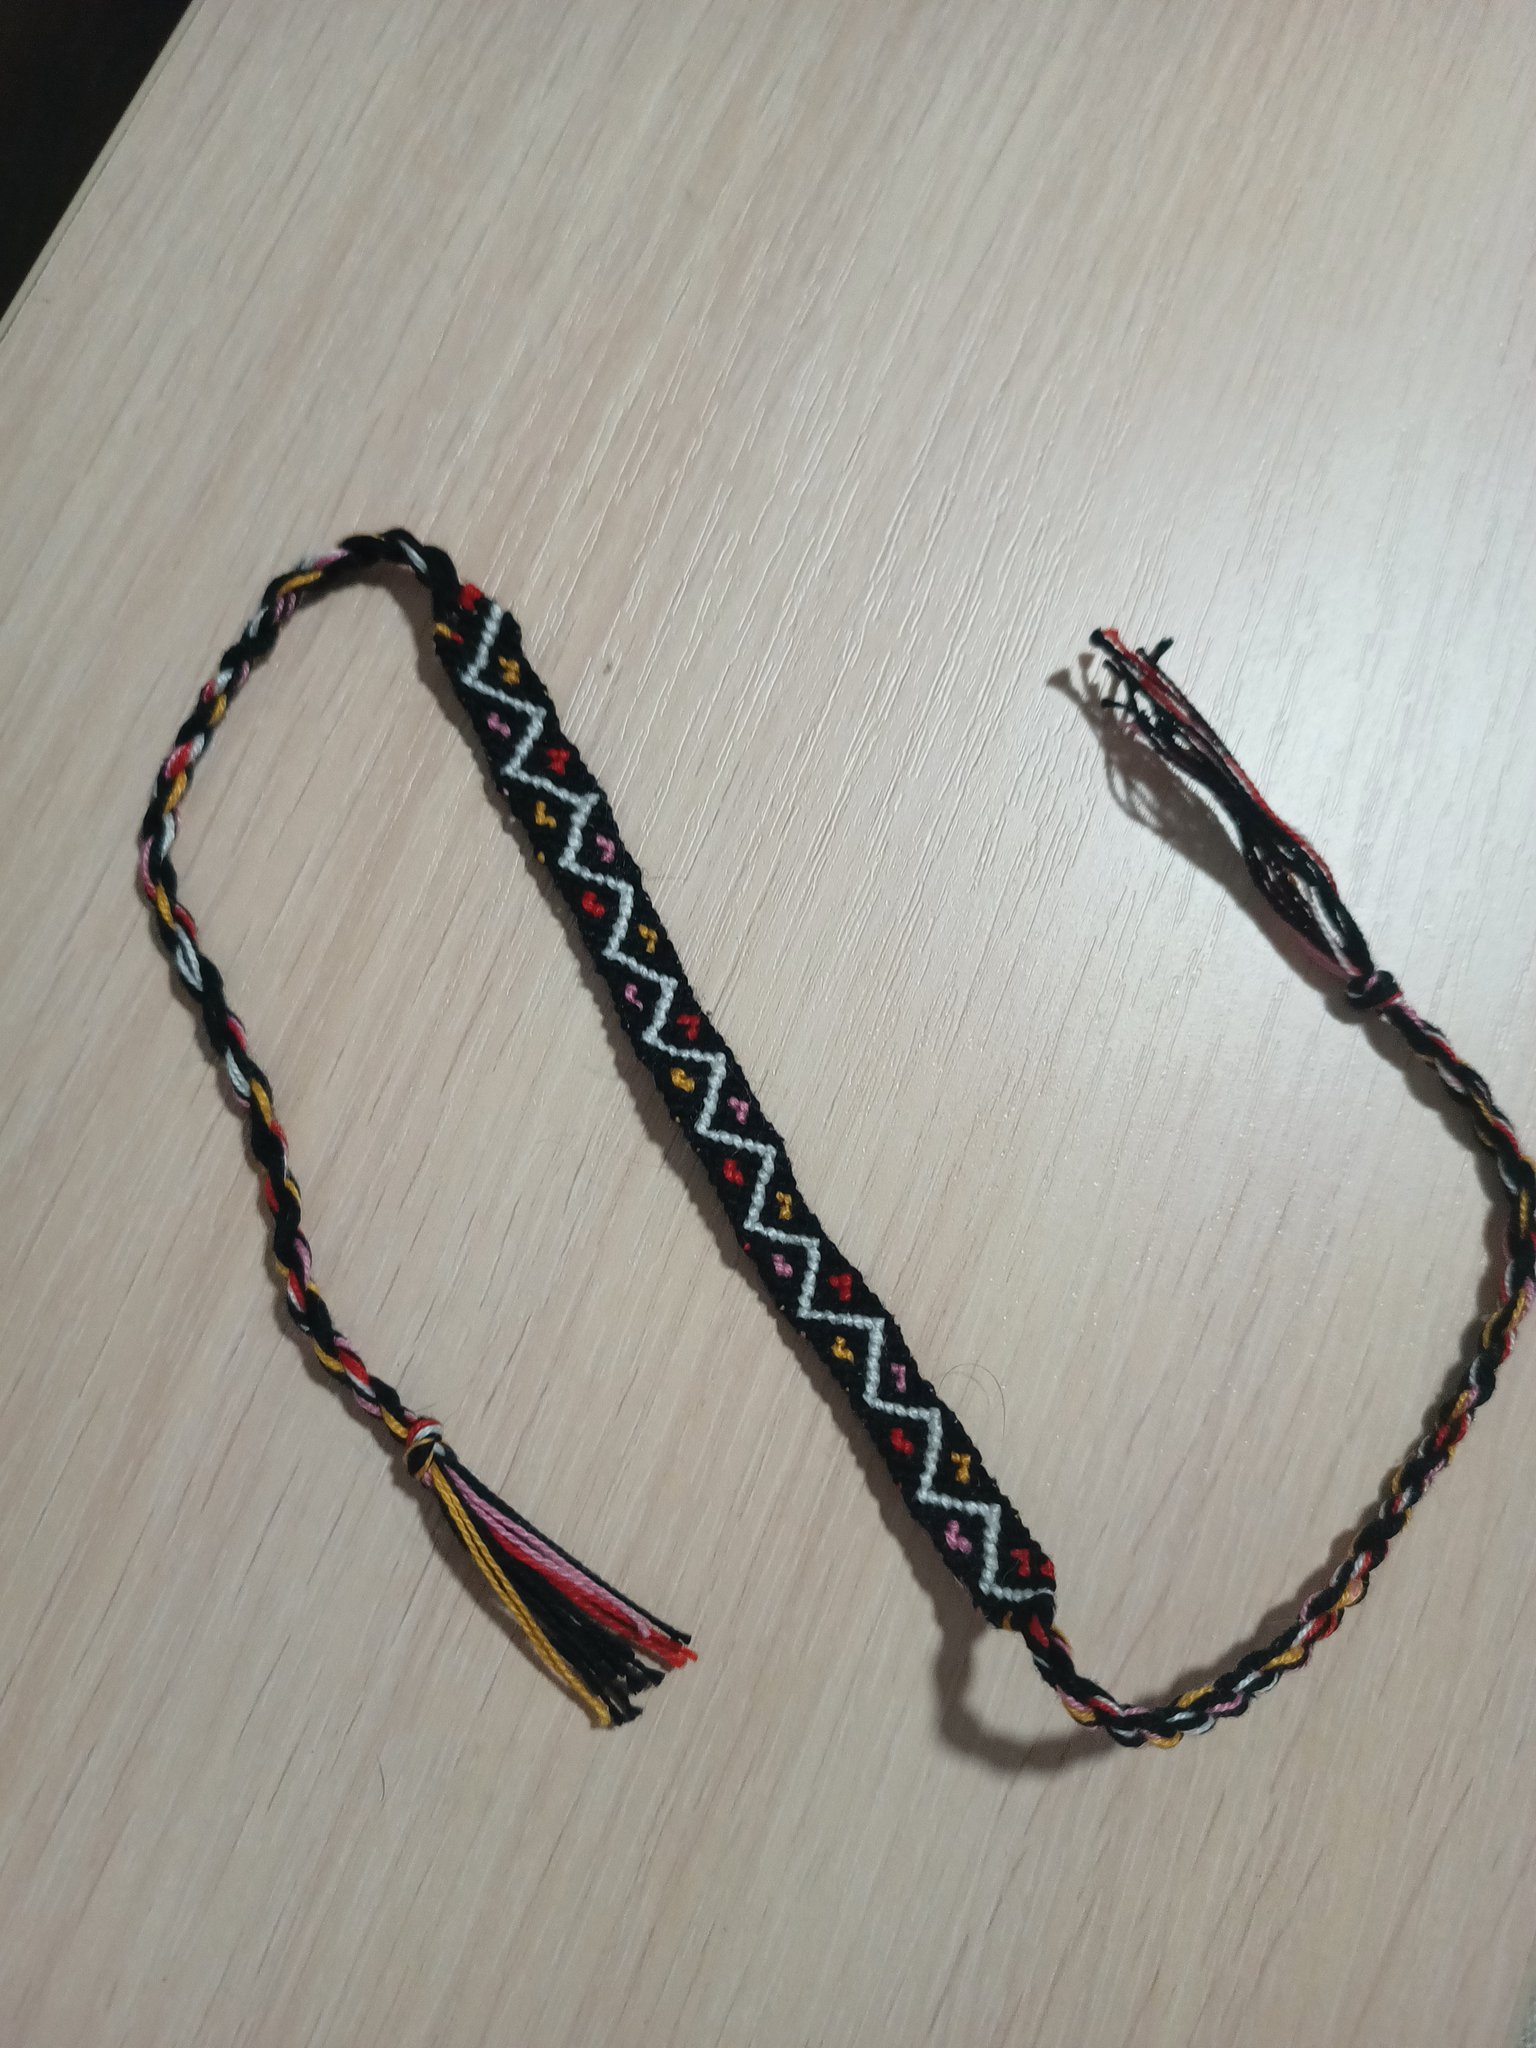 Best Friendship Bracelet Kits